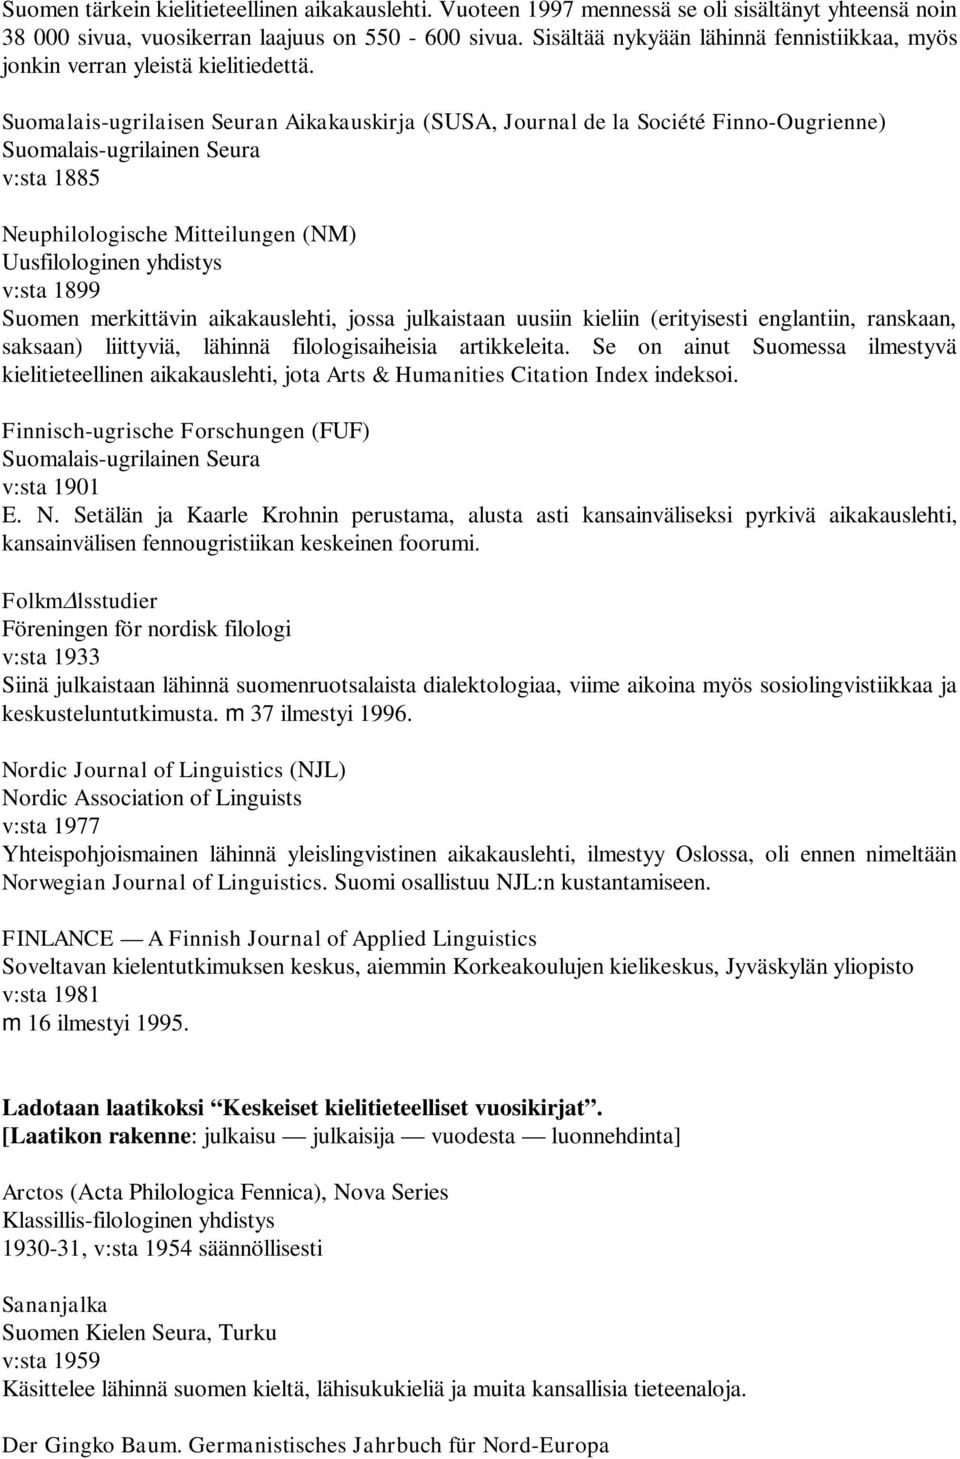 Suomalais-ugrilaisen Seuran Aikakauskirja (SUSA, Journal de la Société Finno-Ougrienne) Suomalais-ugrilainen Seura v:sta 1885 Neuphilologische Mitteilungen (NM) Uusfilologinen yhdistys v:sta 1899